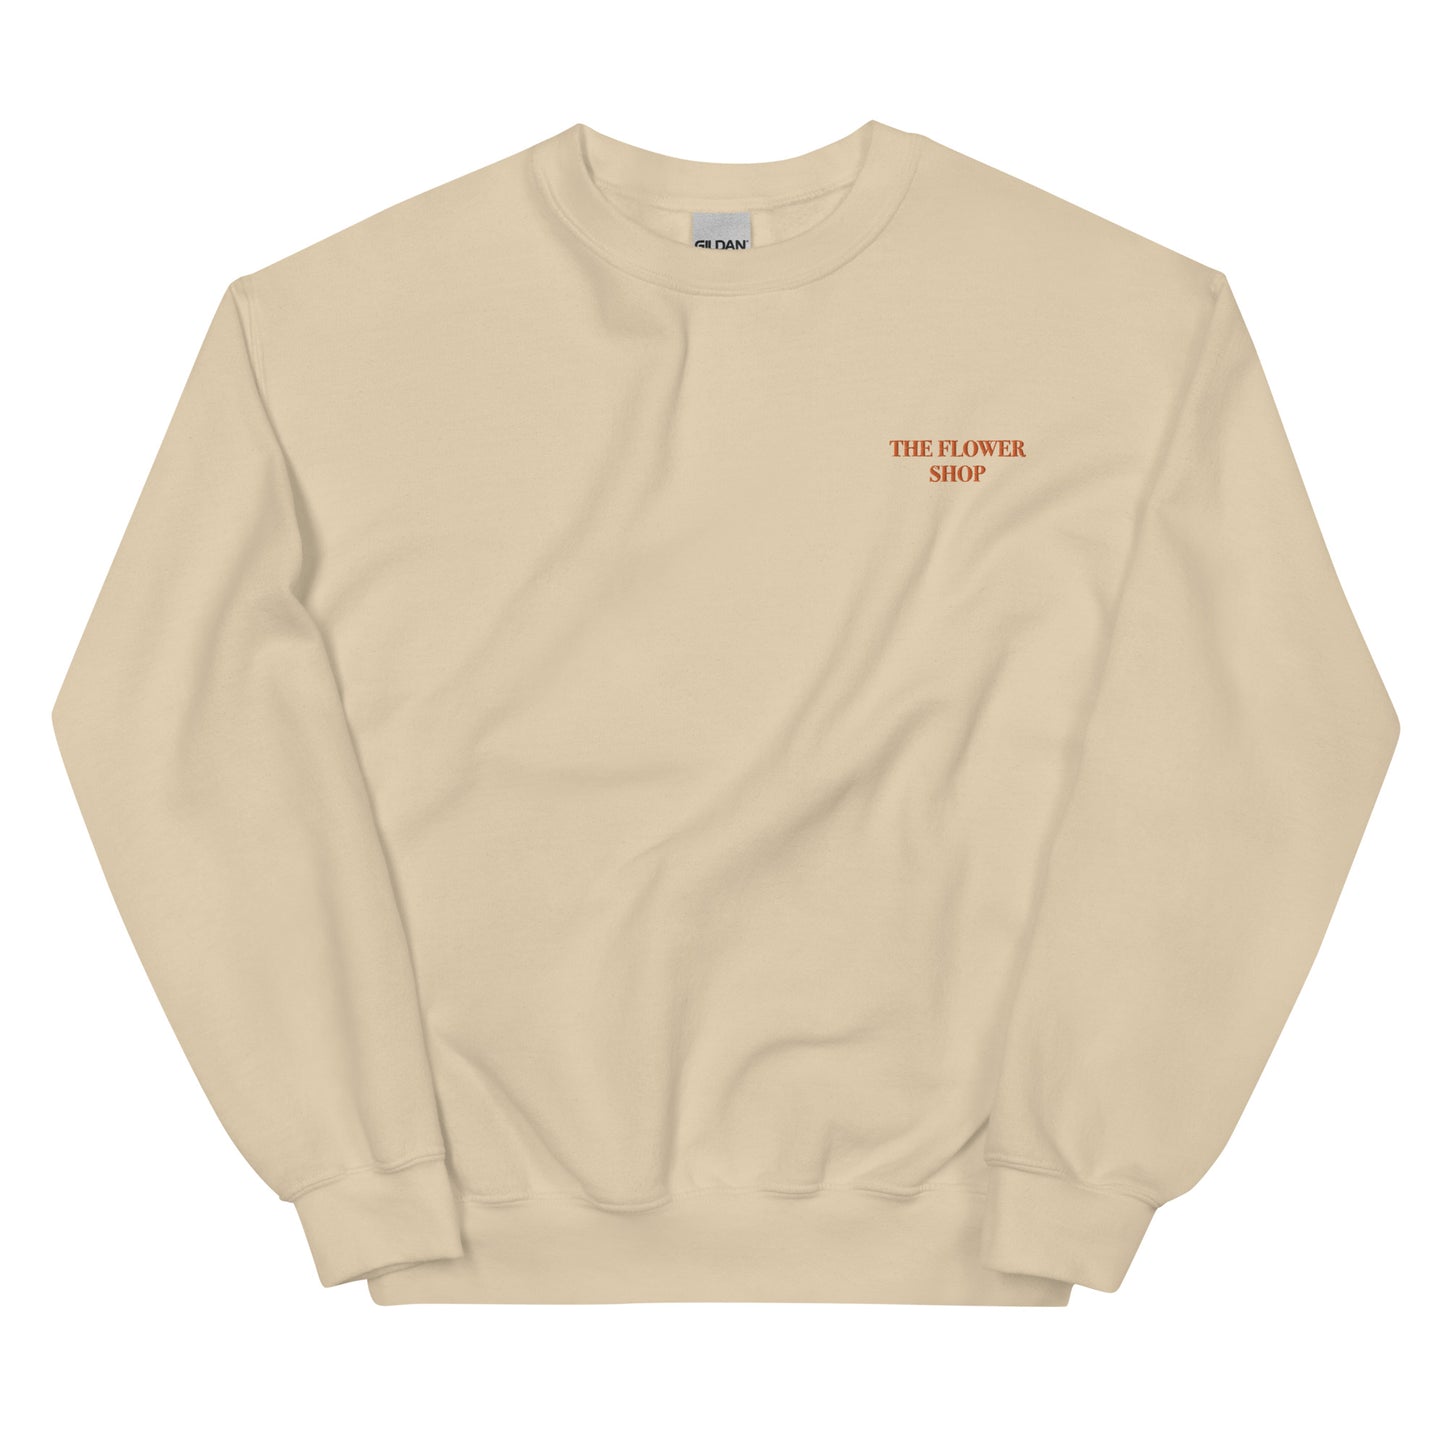 THE SHOP embroidered Unisex Sweatshirt